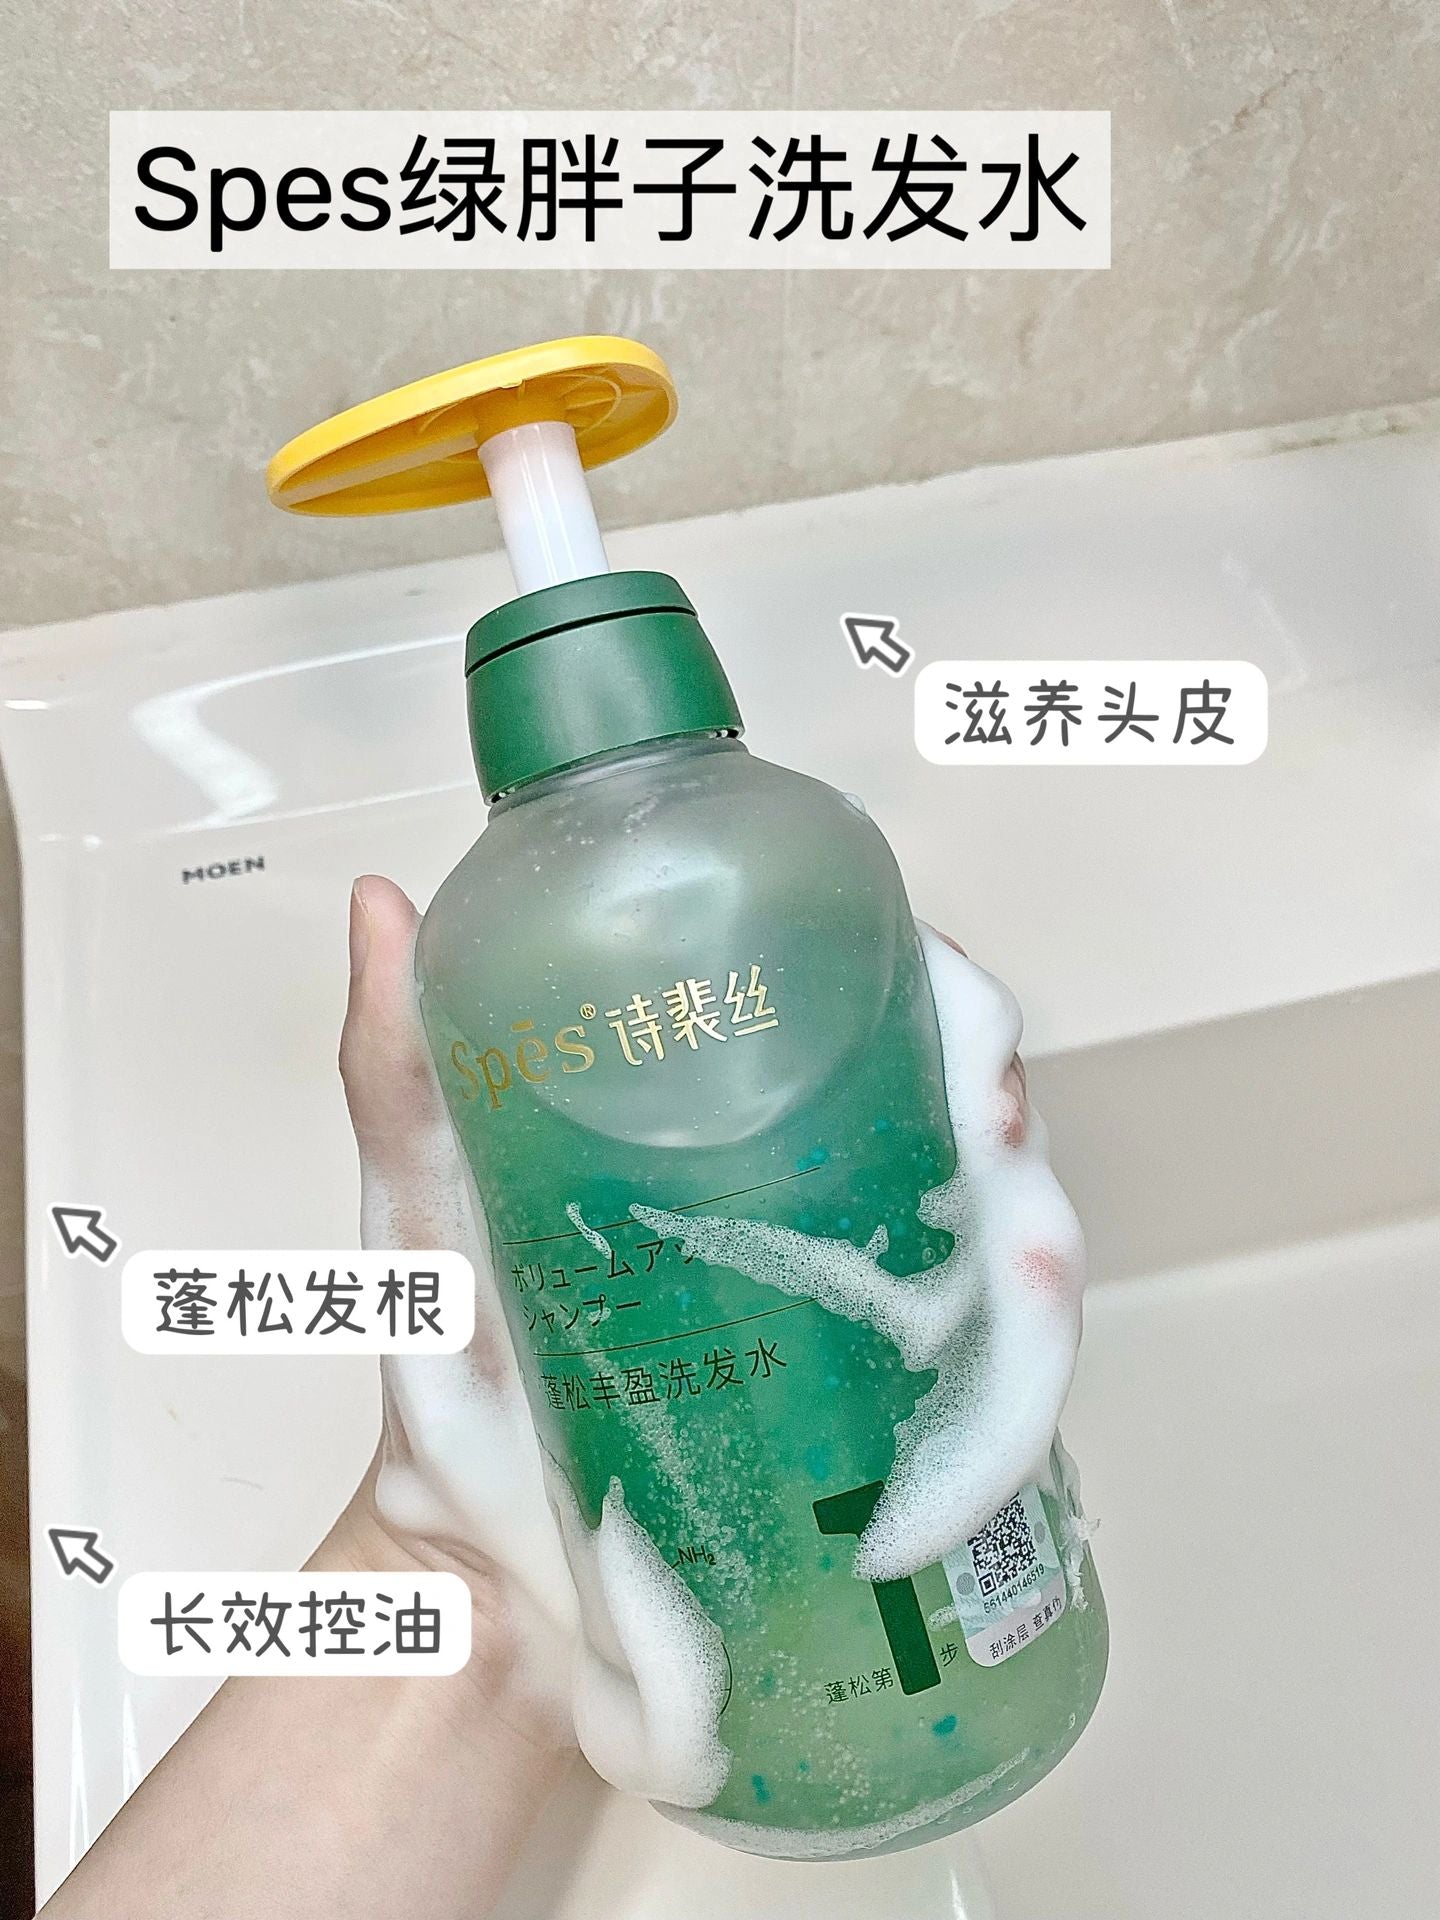 Spes Moisturizing Volume Shampoo/Conditioner 500ml 诗裴丝滋润丰盈蓬松洗发水/护发素